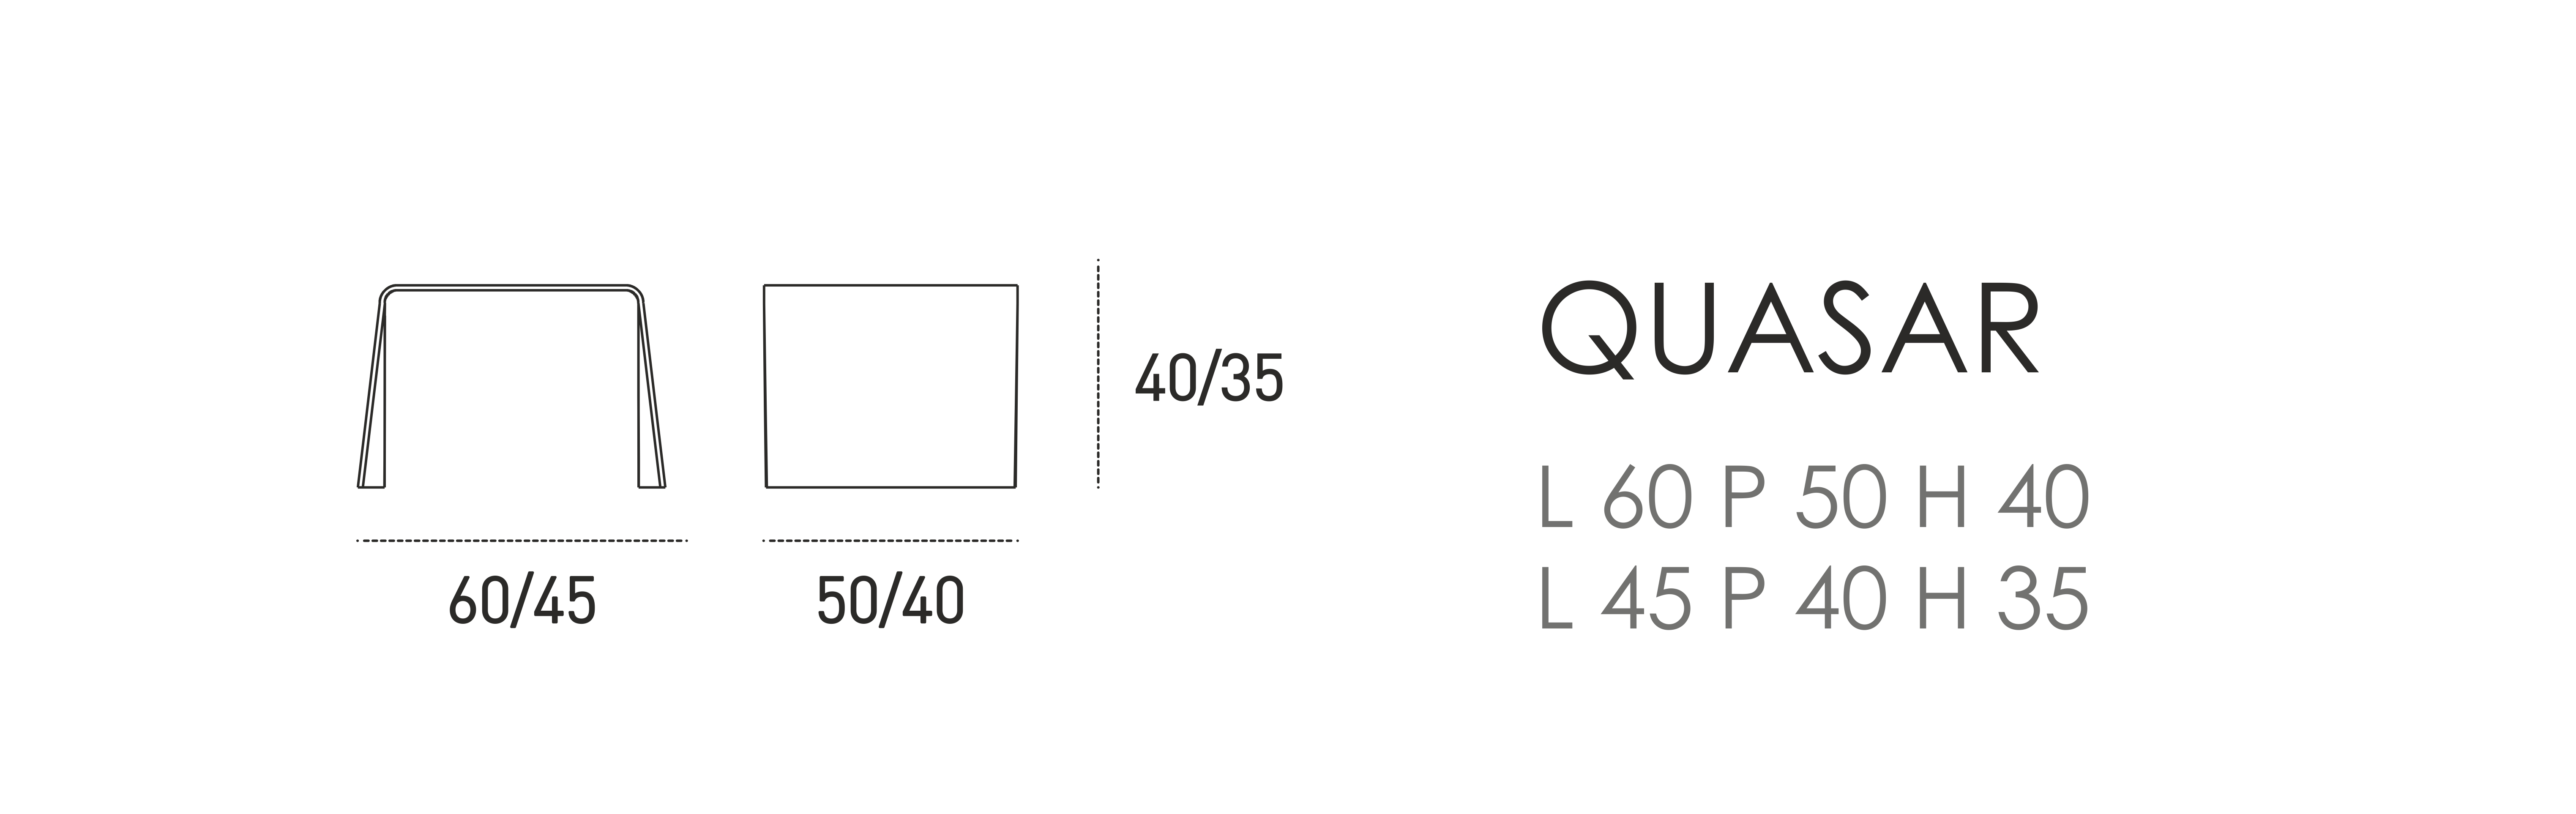 Quasar L 60 P 50 H 40 / L 45 P 40 H 35